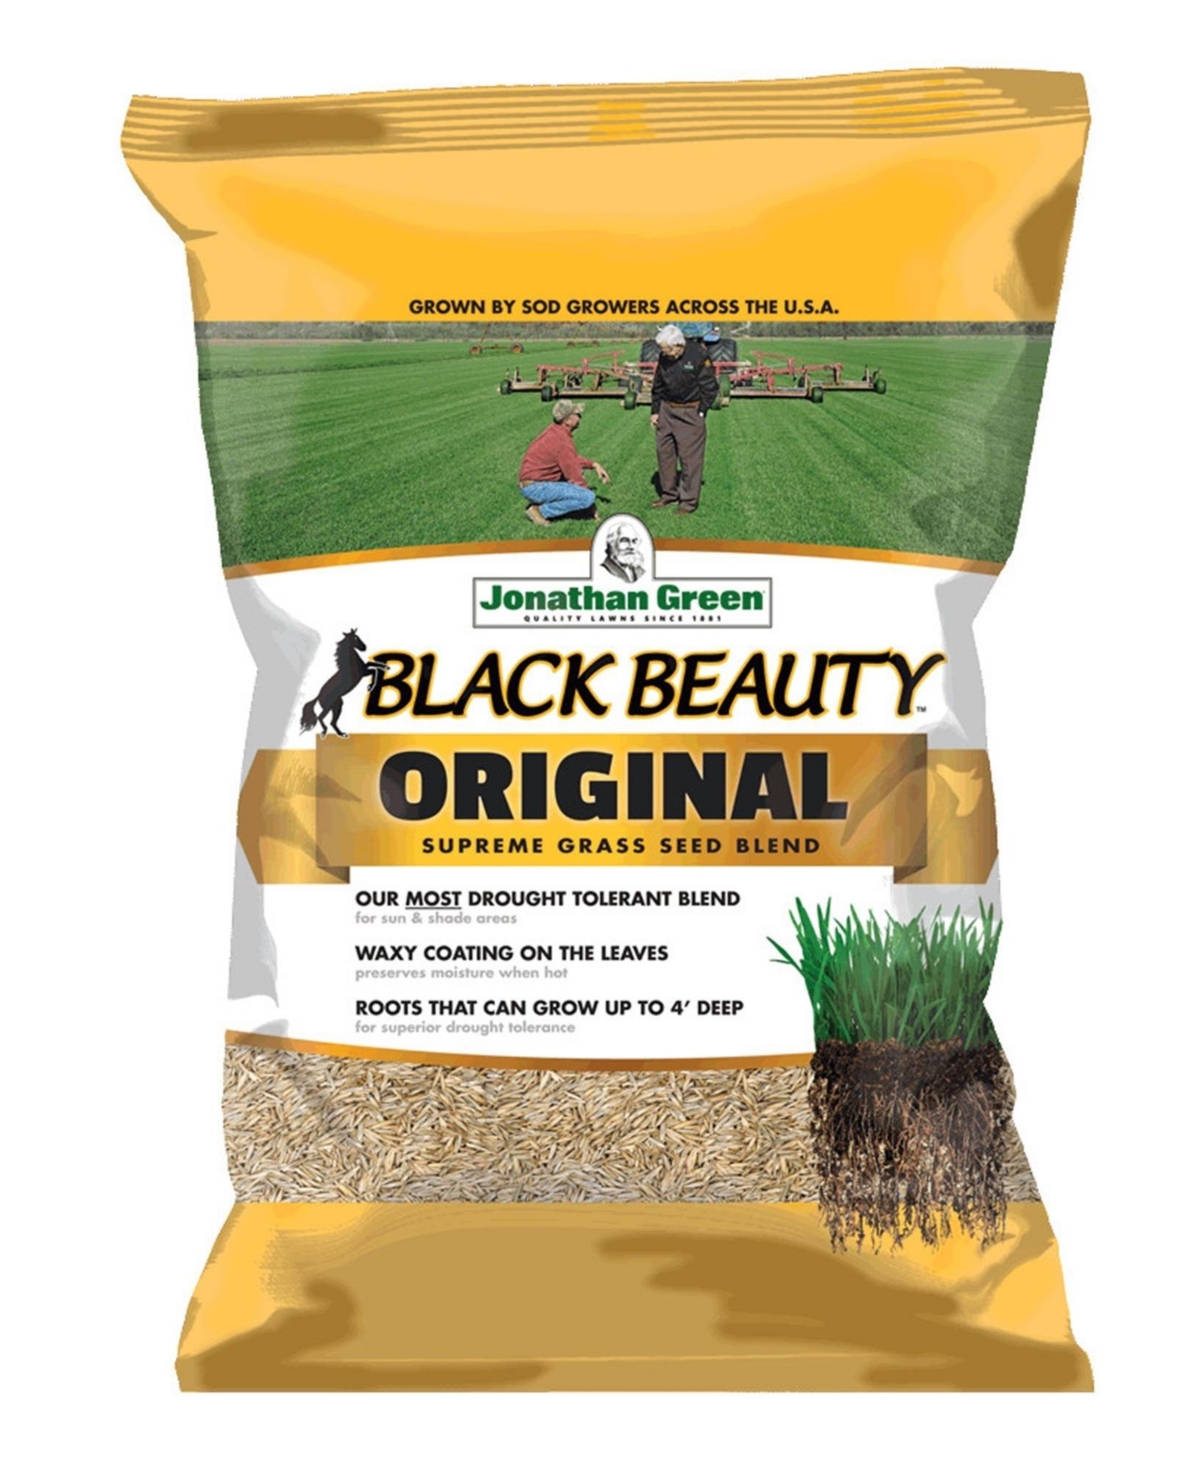 (#10316) Black Beauty Original Grass Seed, 50lb bag - Brown